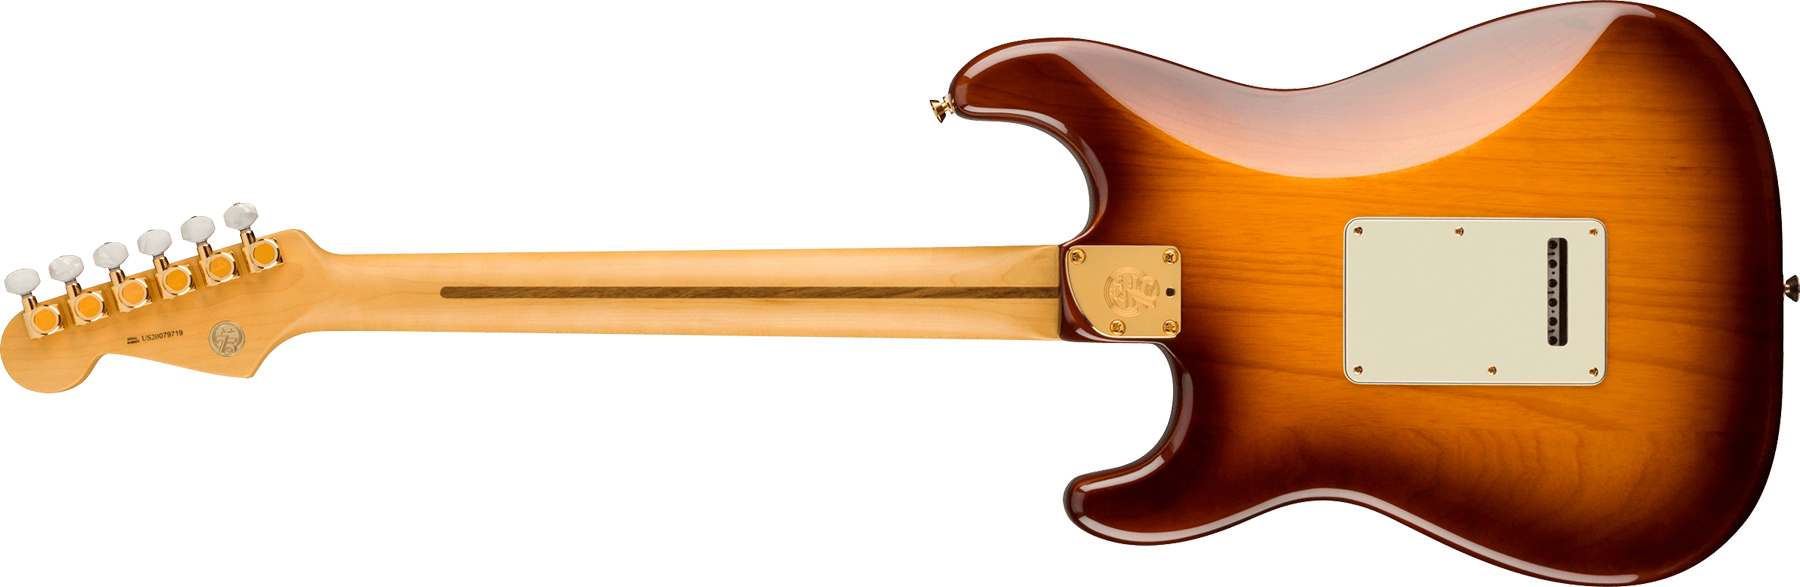 Fender Strat 75th Anniversary Commemorative Ltd Usa Mn +etui - 2-color Bourbon Burst - Str shape electric guitar - Variation 1